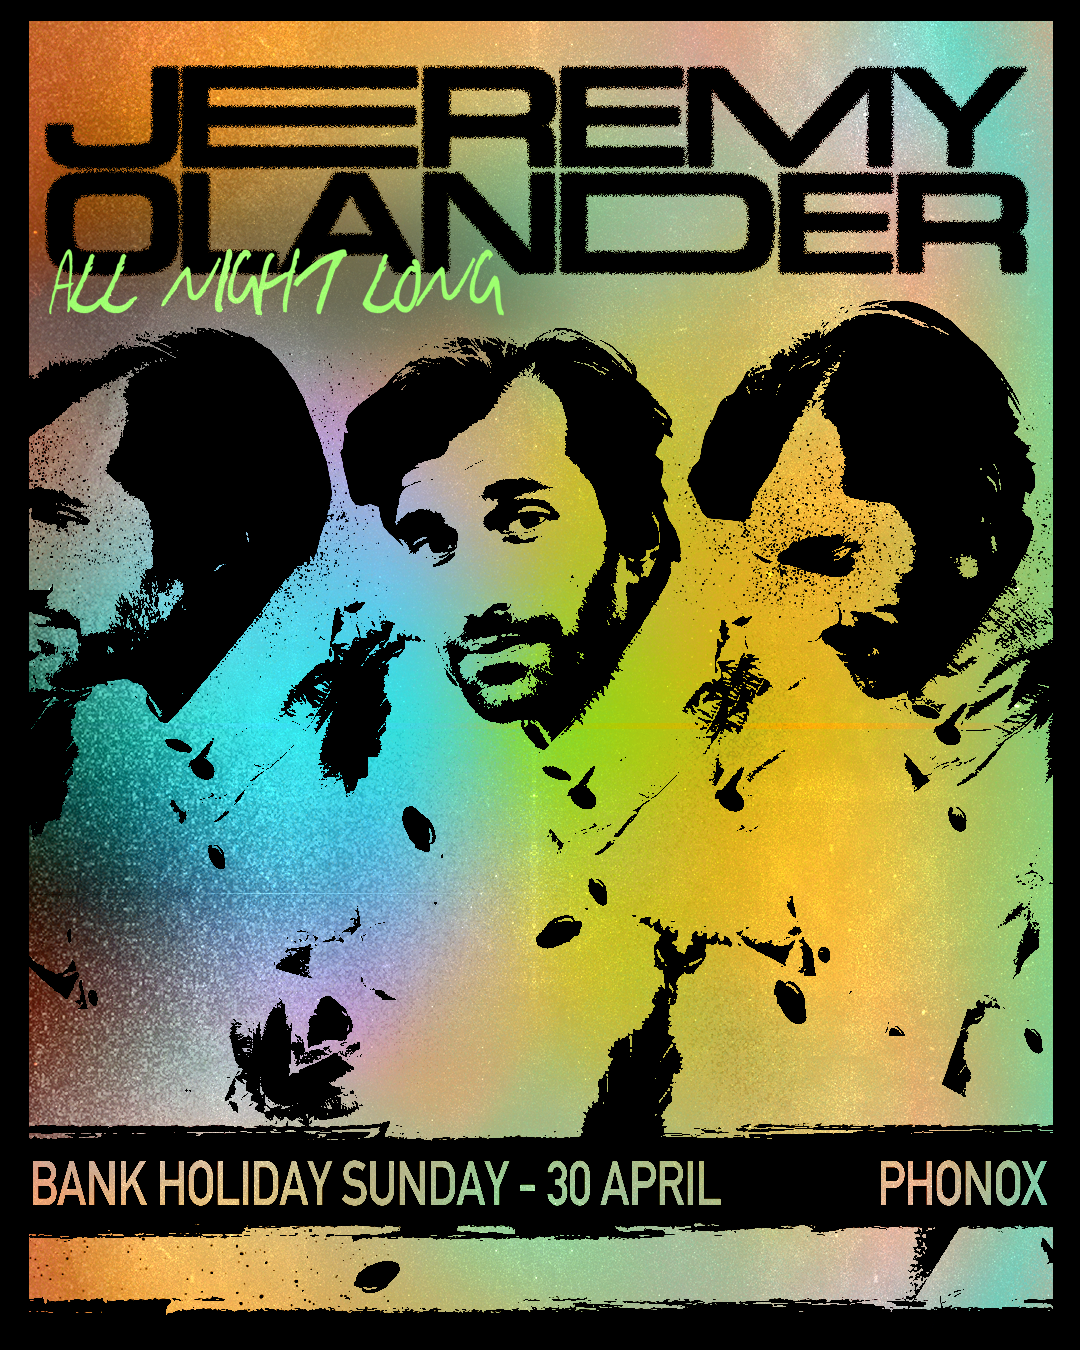 Bank Holiday Sunday: Jeremy Olander (All Night Long) - London - フライヤー裏